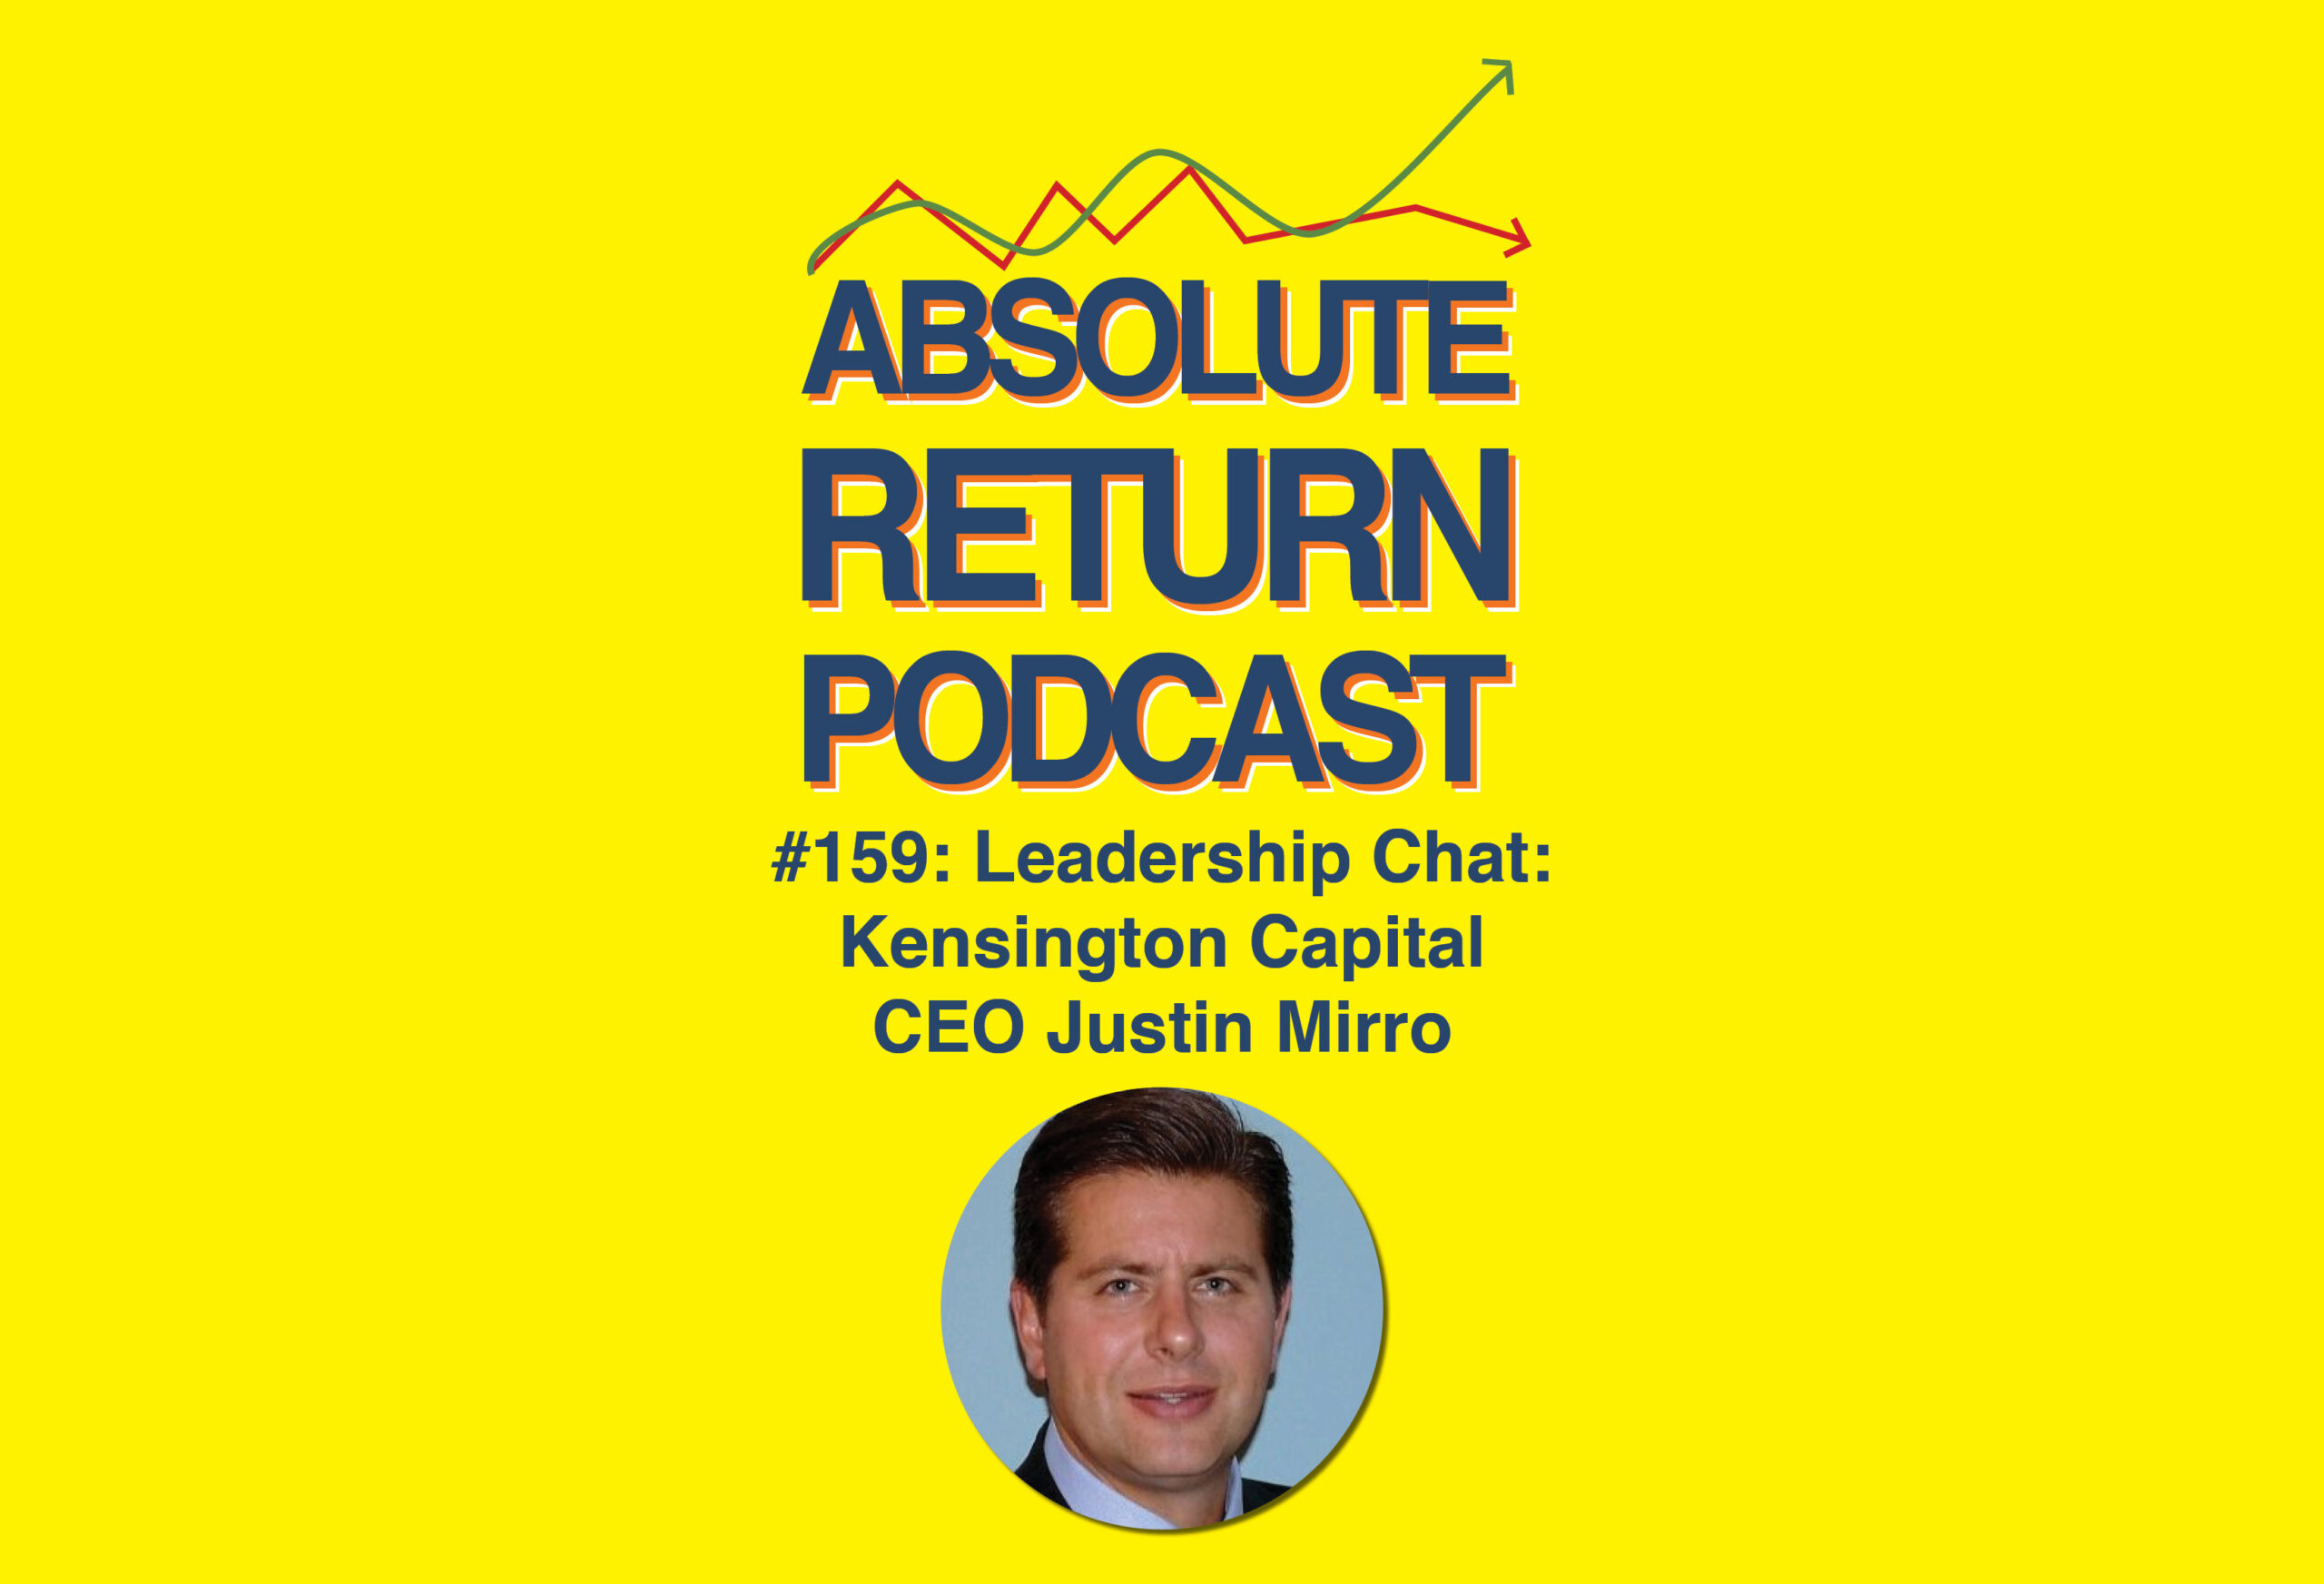 Absolute Return Podcast #159: Leadership Chat: Kensington Capital CEO Justin Mirro